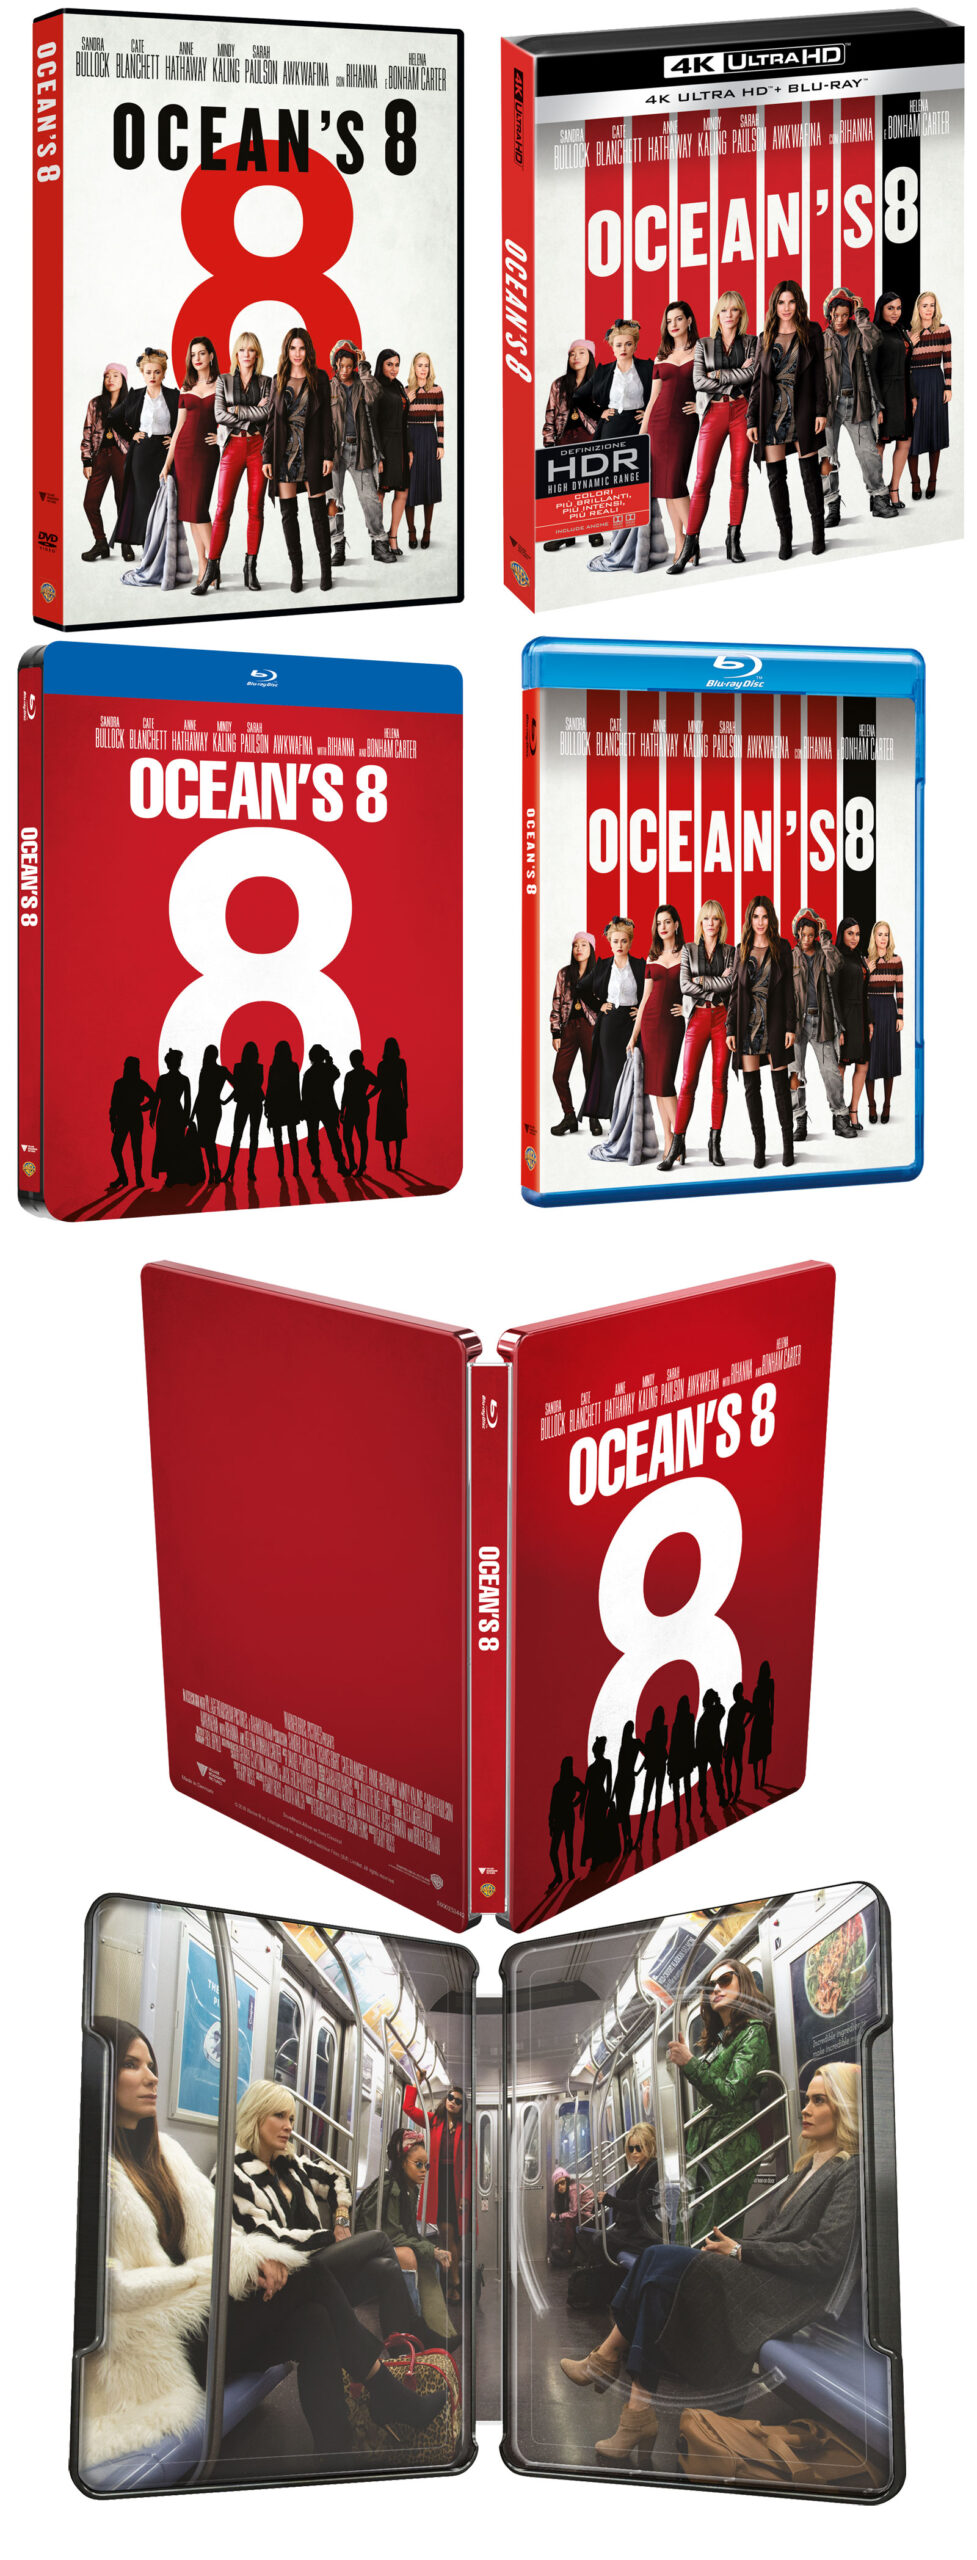 ocean-s-8-dvd-bluray-4k-uhd